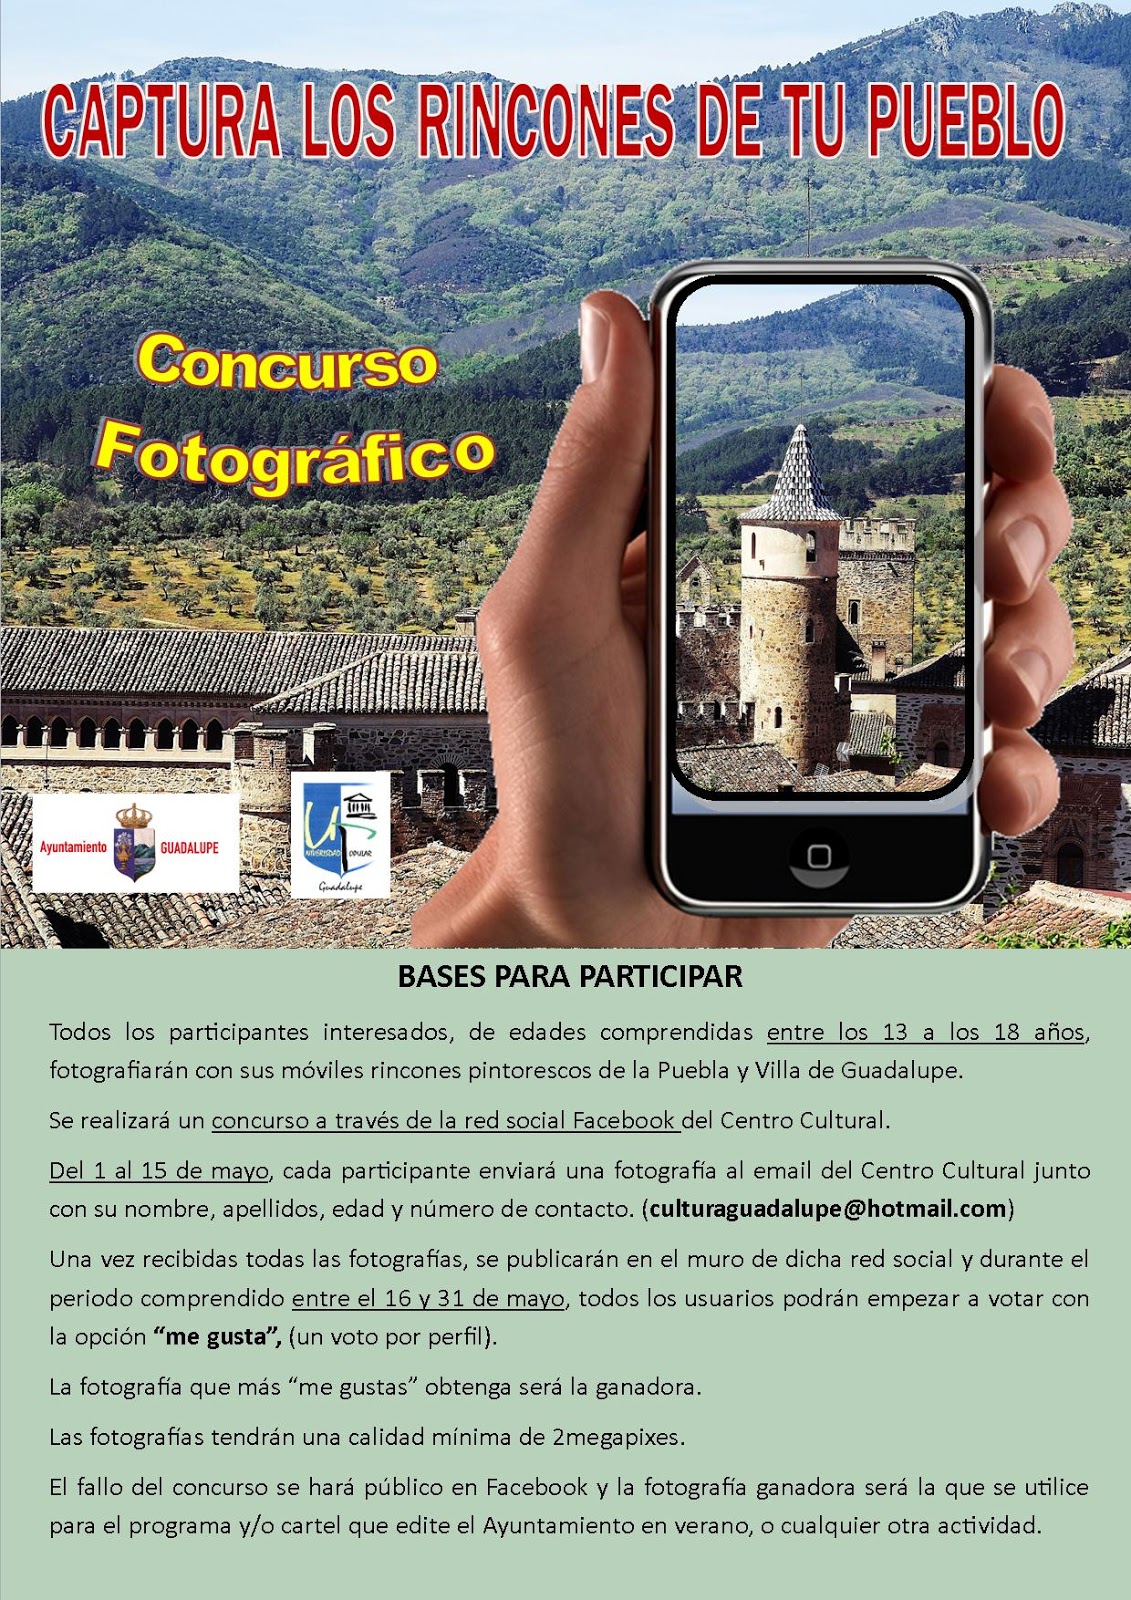 Concurso fotográfico Mayo 2017 - Guadalupe